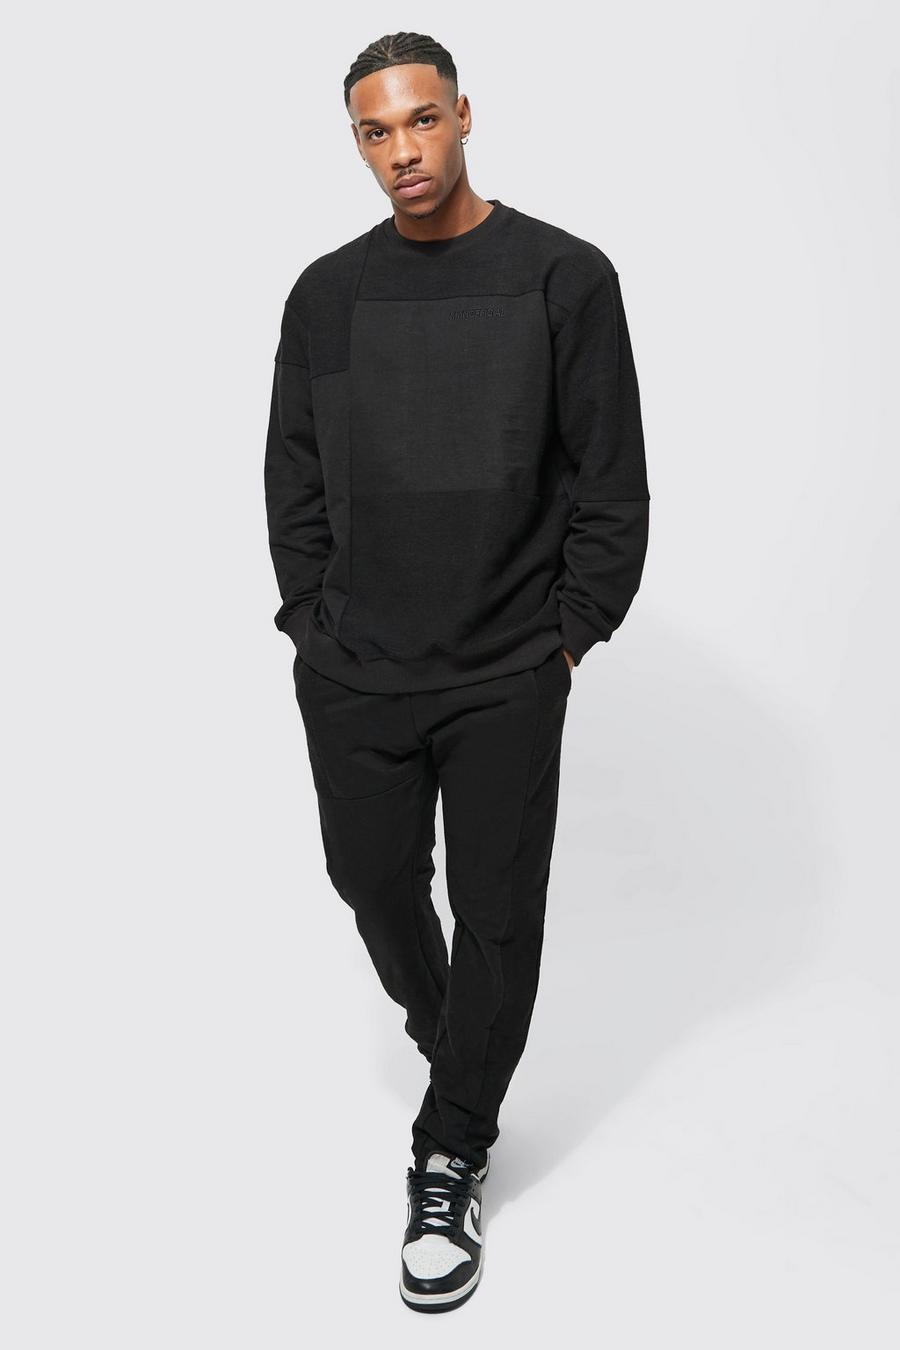 Black Oversized Man Patchwork Sweater Tracksuit 